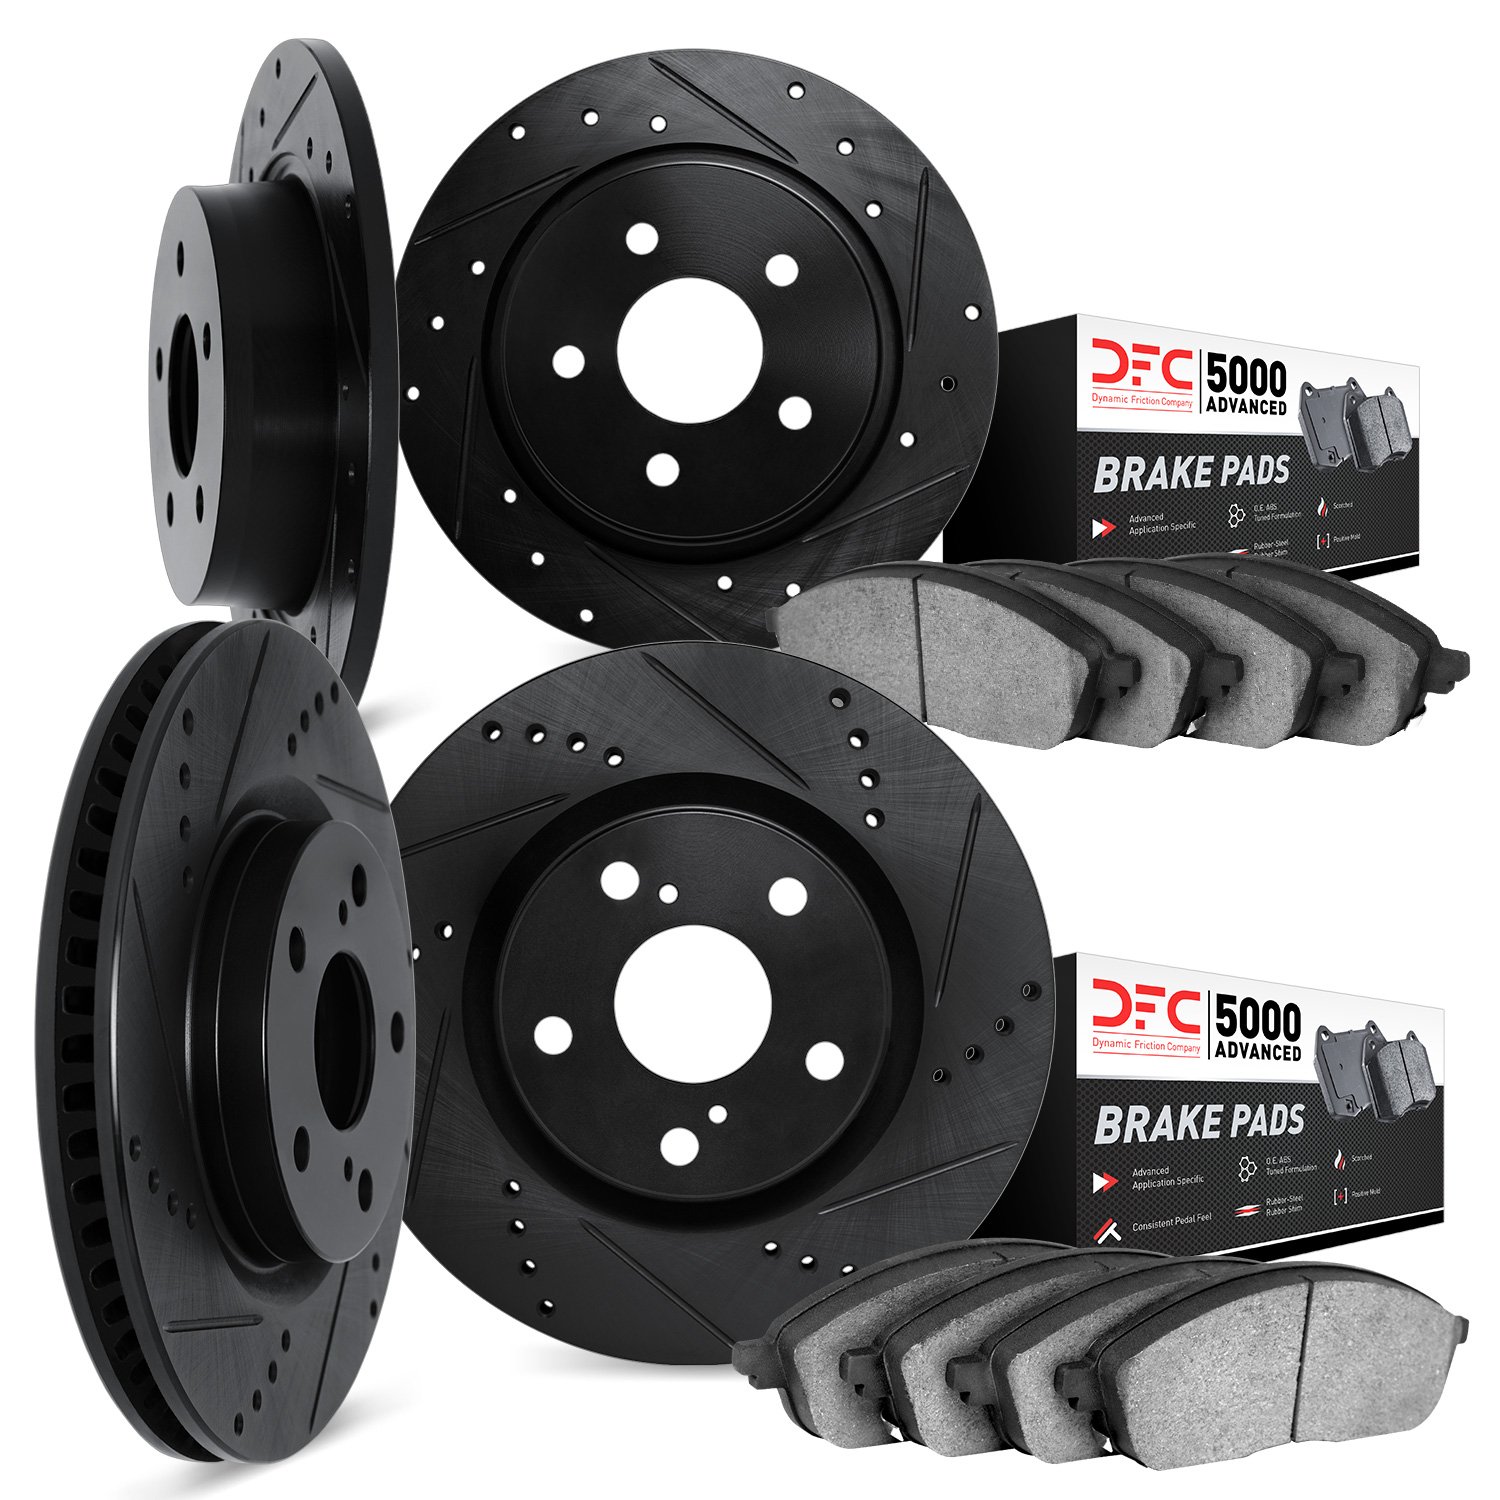 8504-54360 Drilled/Slotted Brake Rotors w/5000 Advanced Brake Pads Kit [Black], 2008-2008 Ford/Lincoln/Mercury/Mazda, Position: